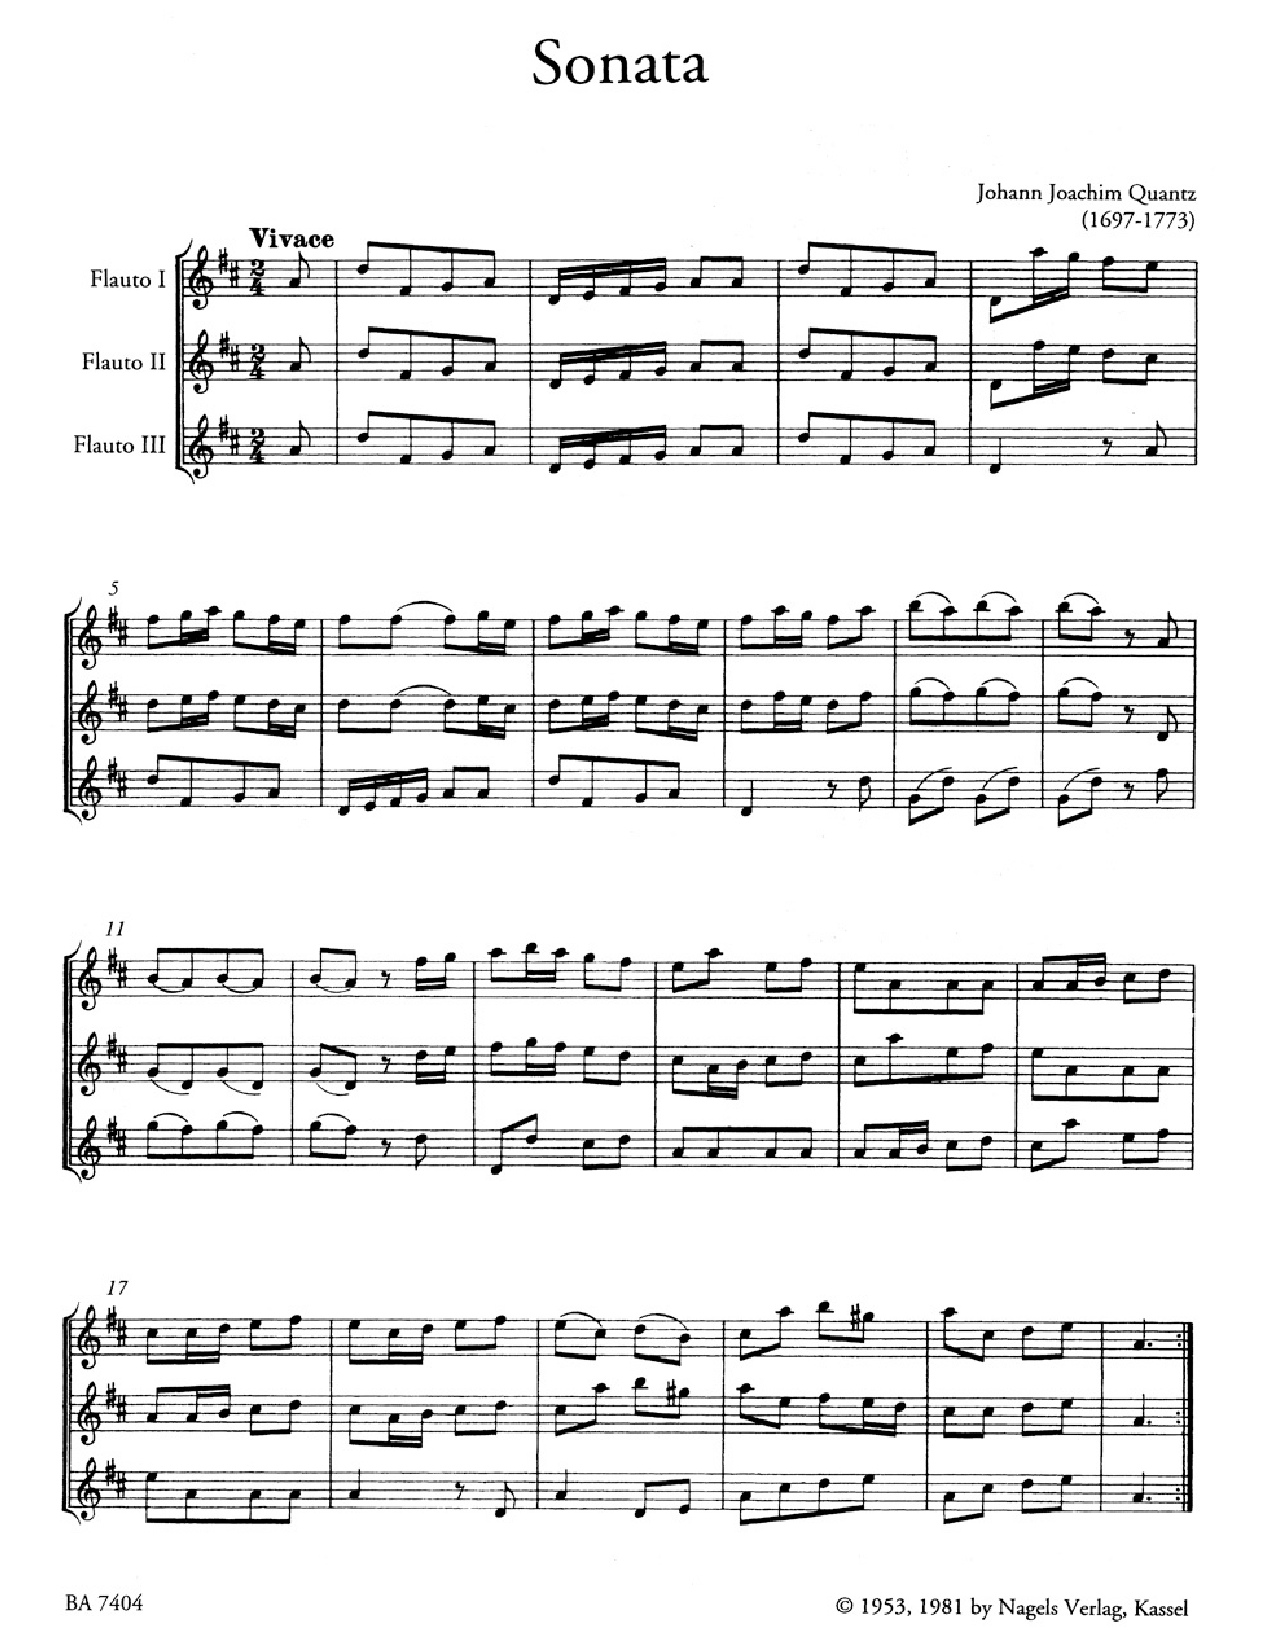 Sonata in D Major for Three Flutes